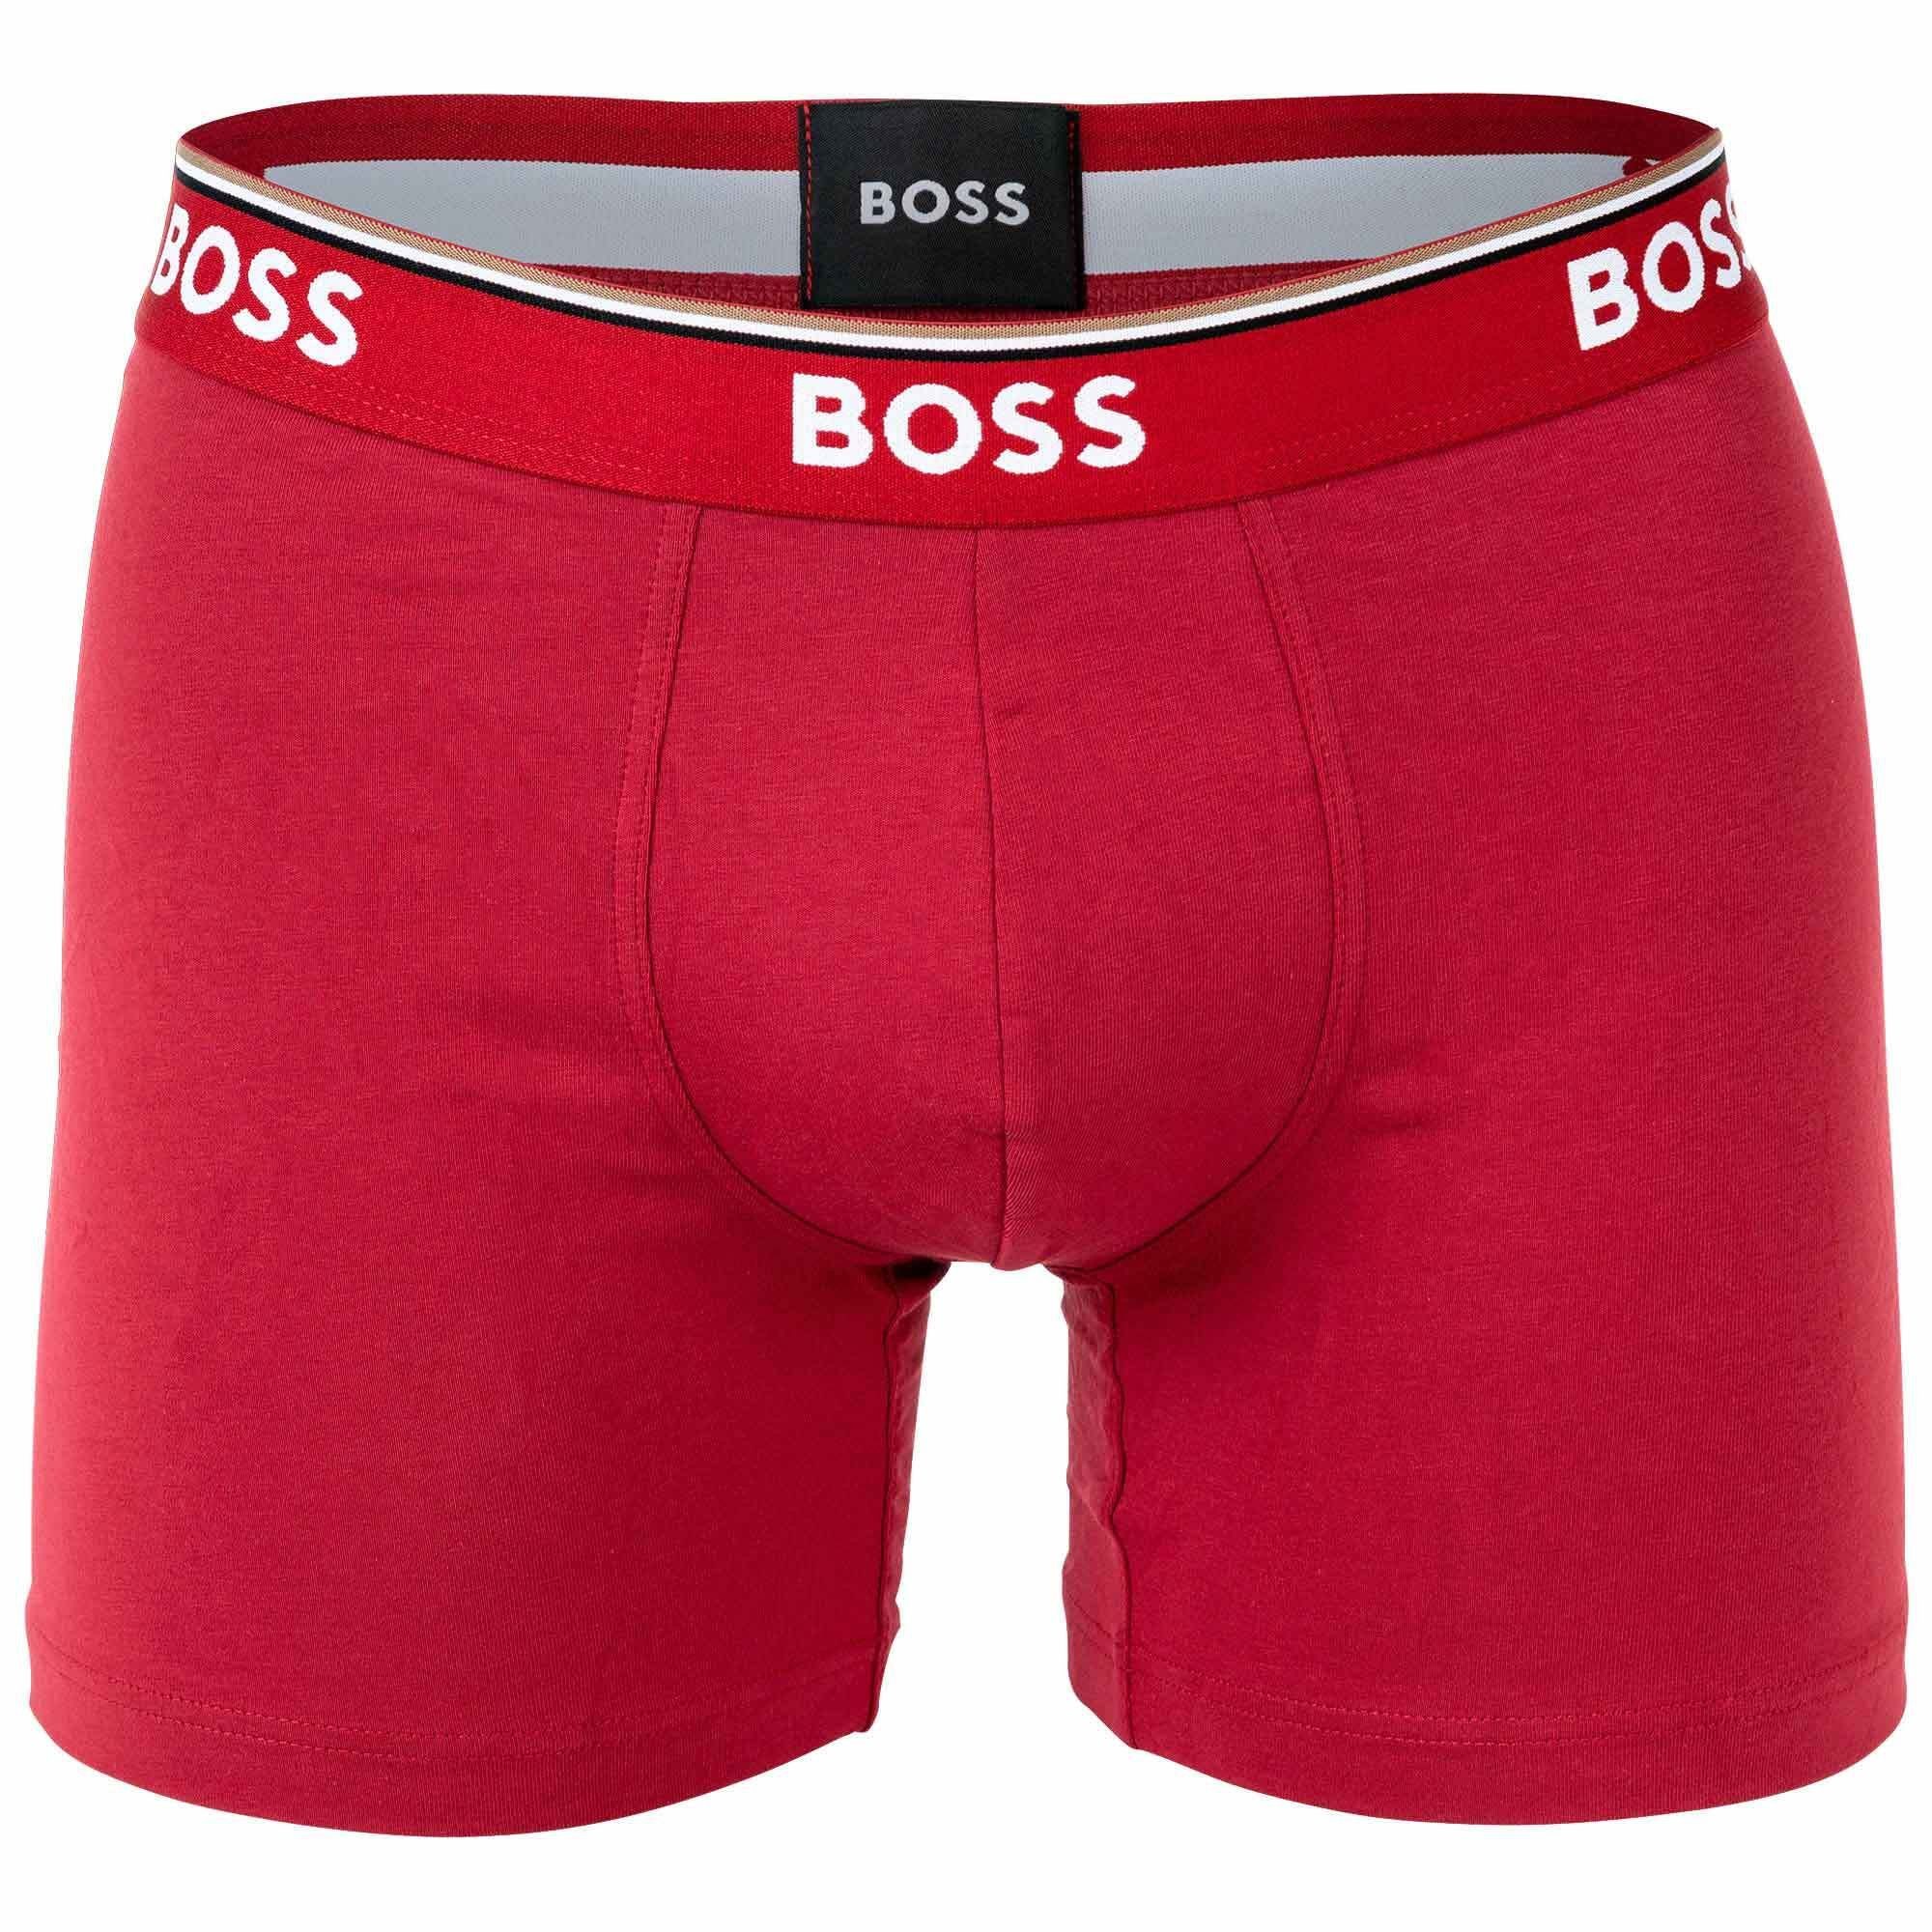 - Boxershorts, BOSS Boxer 6er Rot/Blau/Schwarz 6P Herren Briefs Boxer Pack